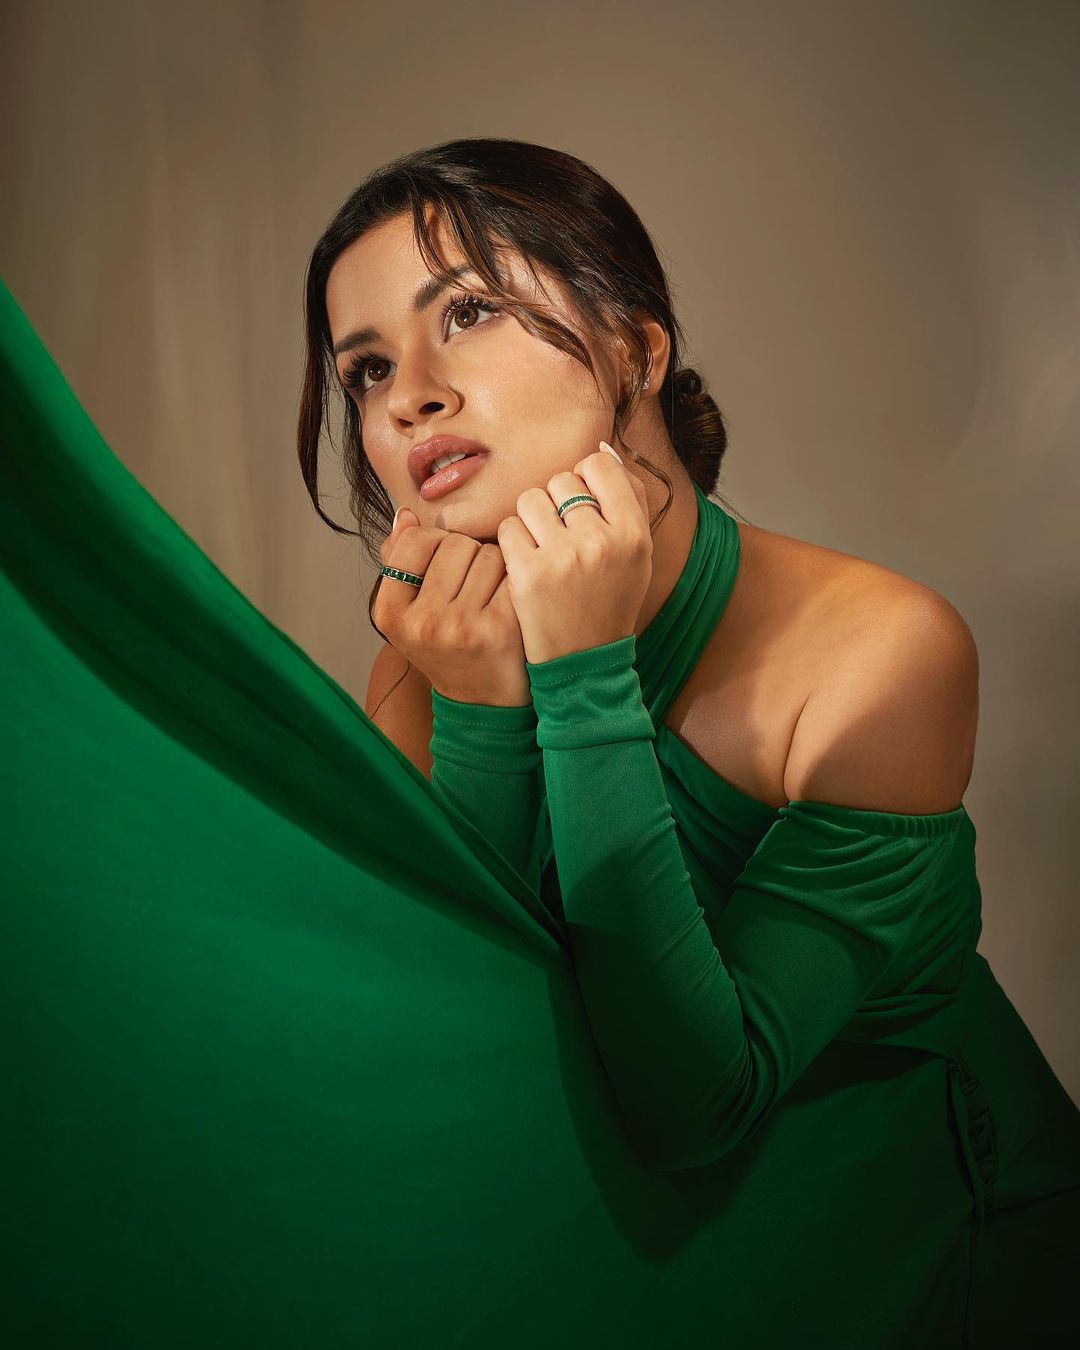 avneet-kaur-bold-photo-in-green-gown